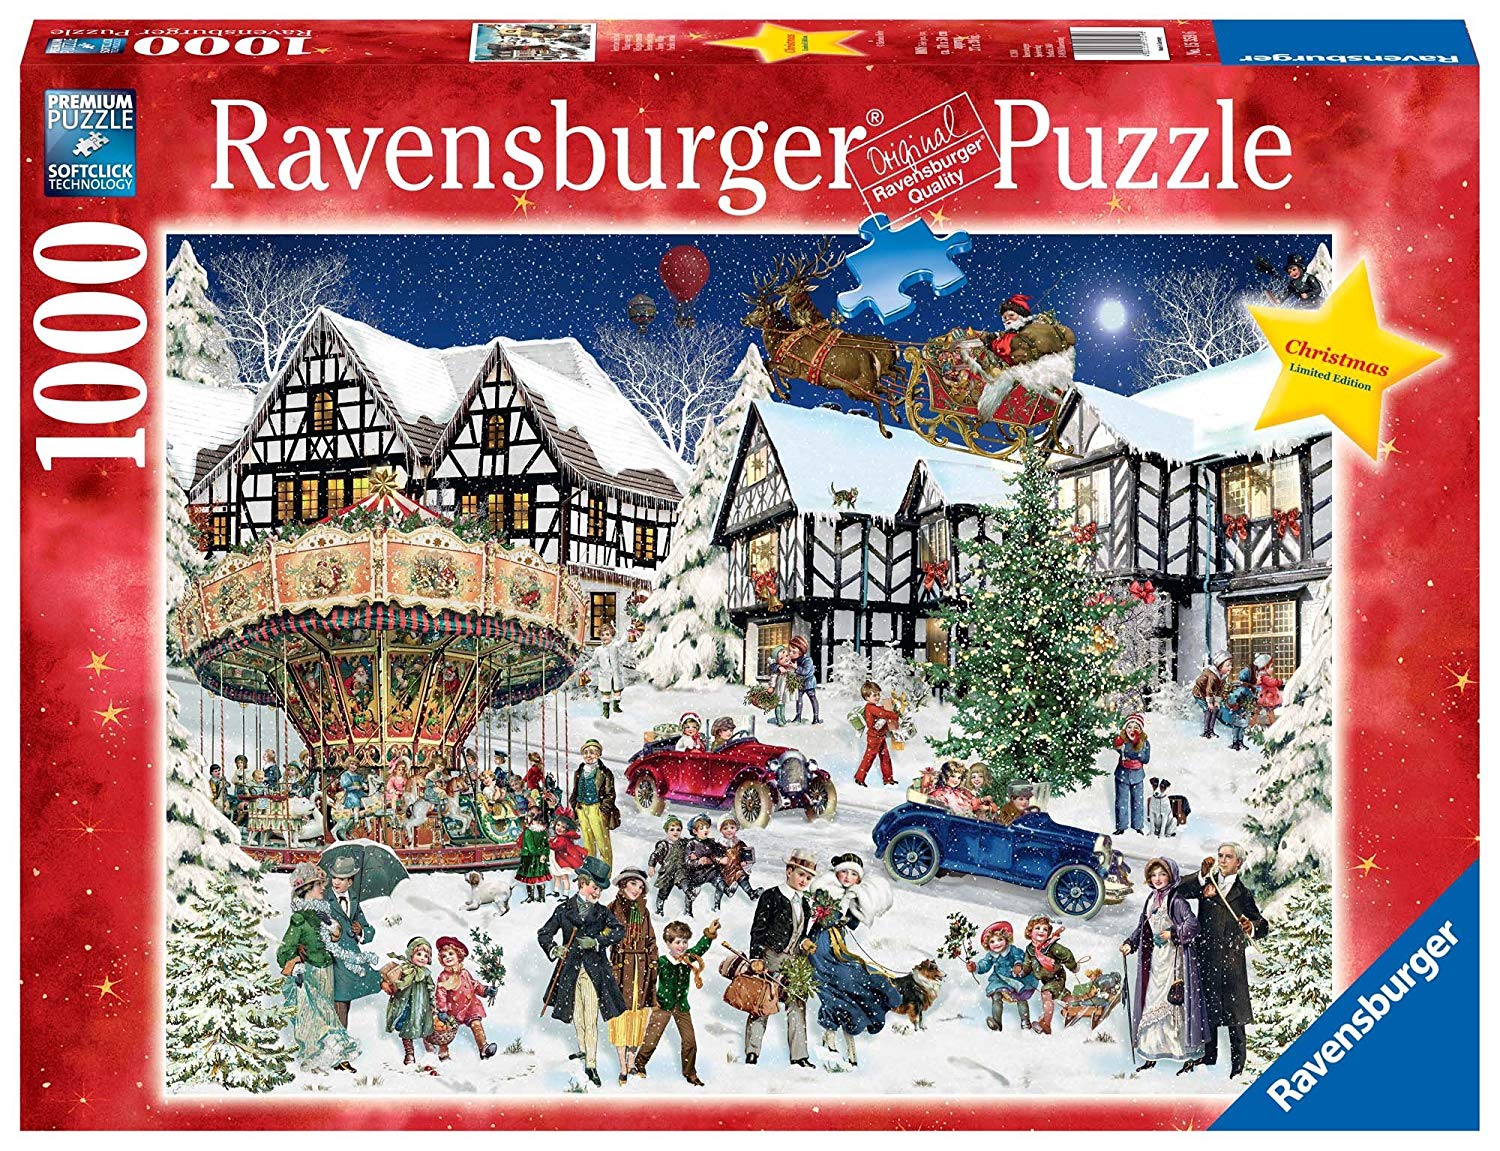 Ravensburger 15359 Snow Covered Christmas Village Scene Jigsaw Puzzle